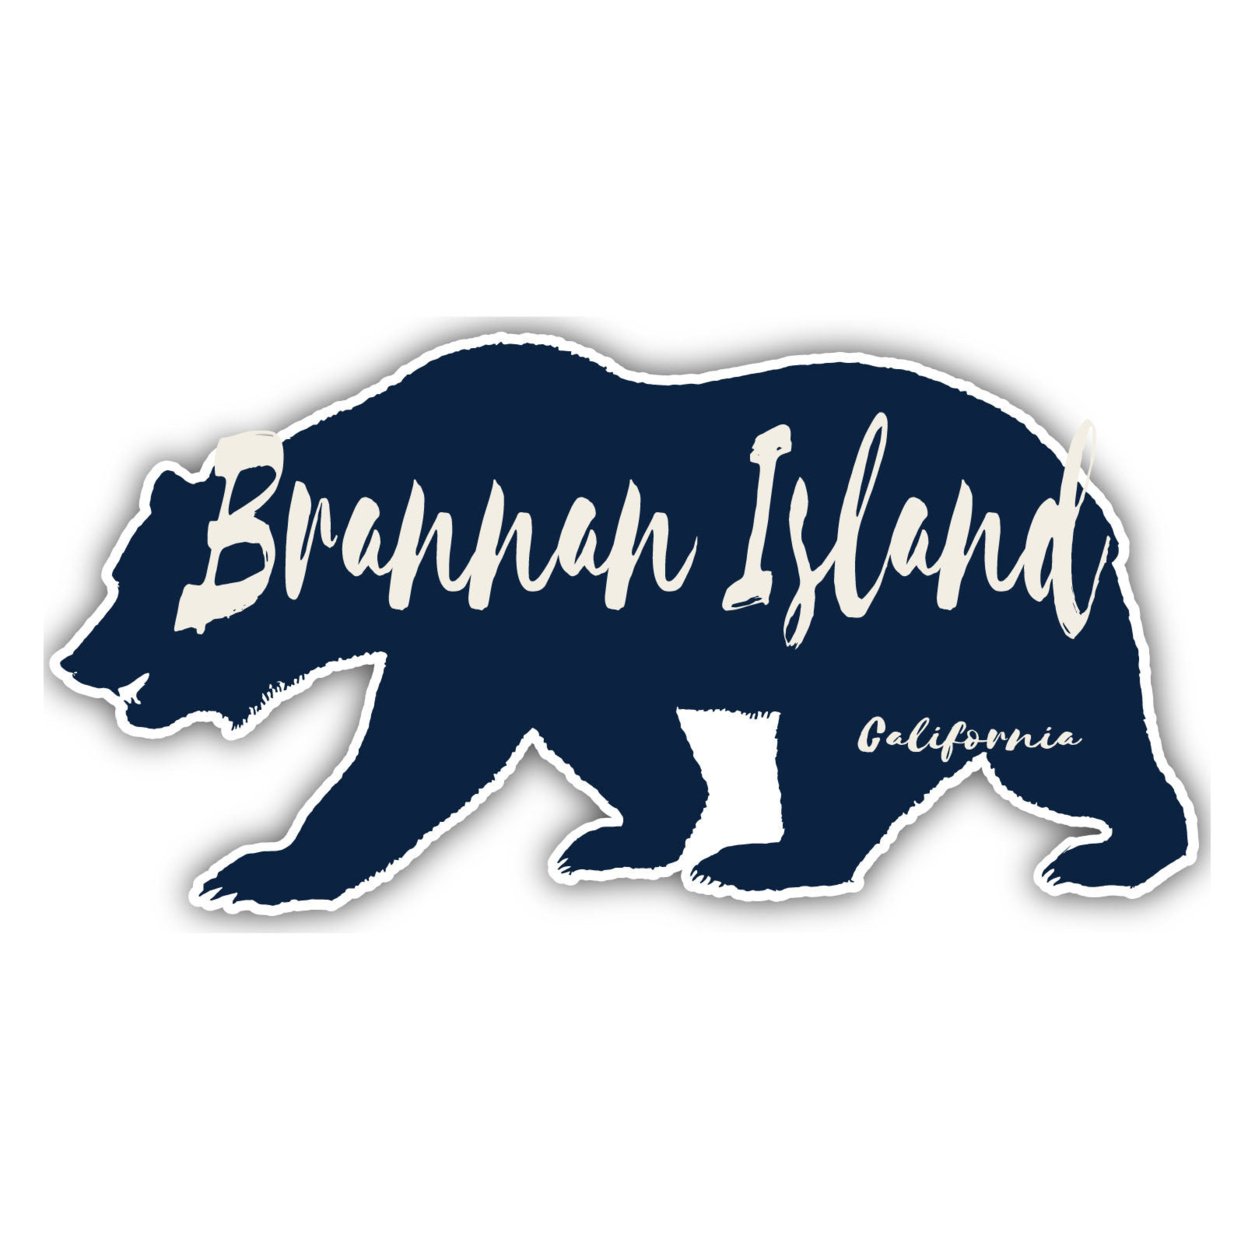 Brannan Island California Souvenir Decorative Stickers (Choose Theme And Size) - 4-Pack, 4-Inch, Bear